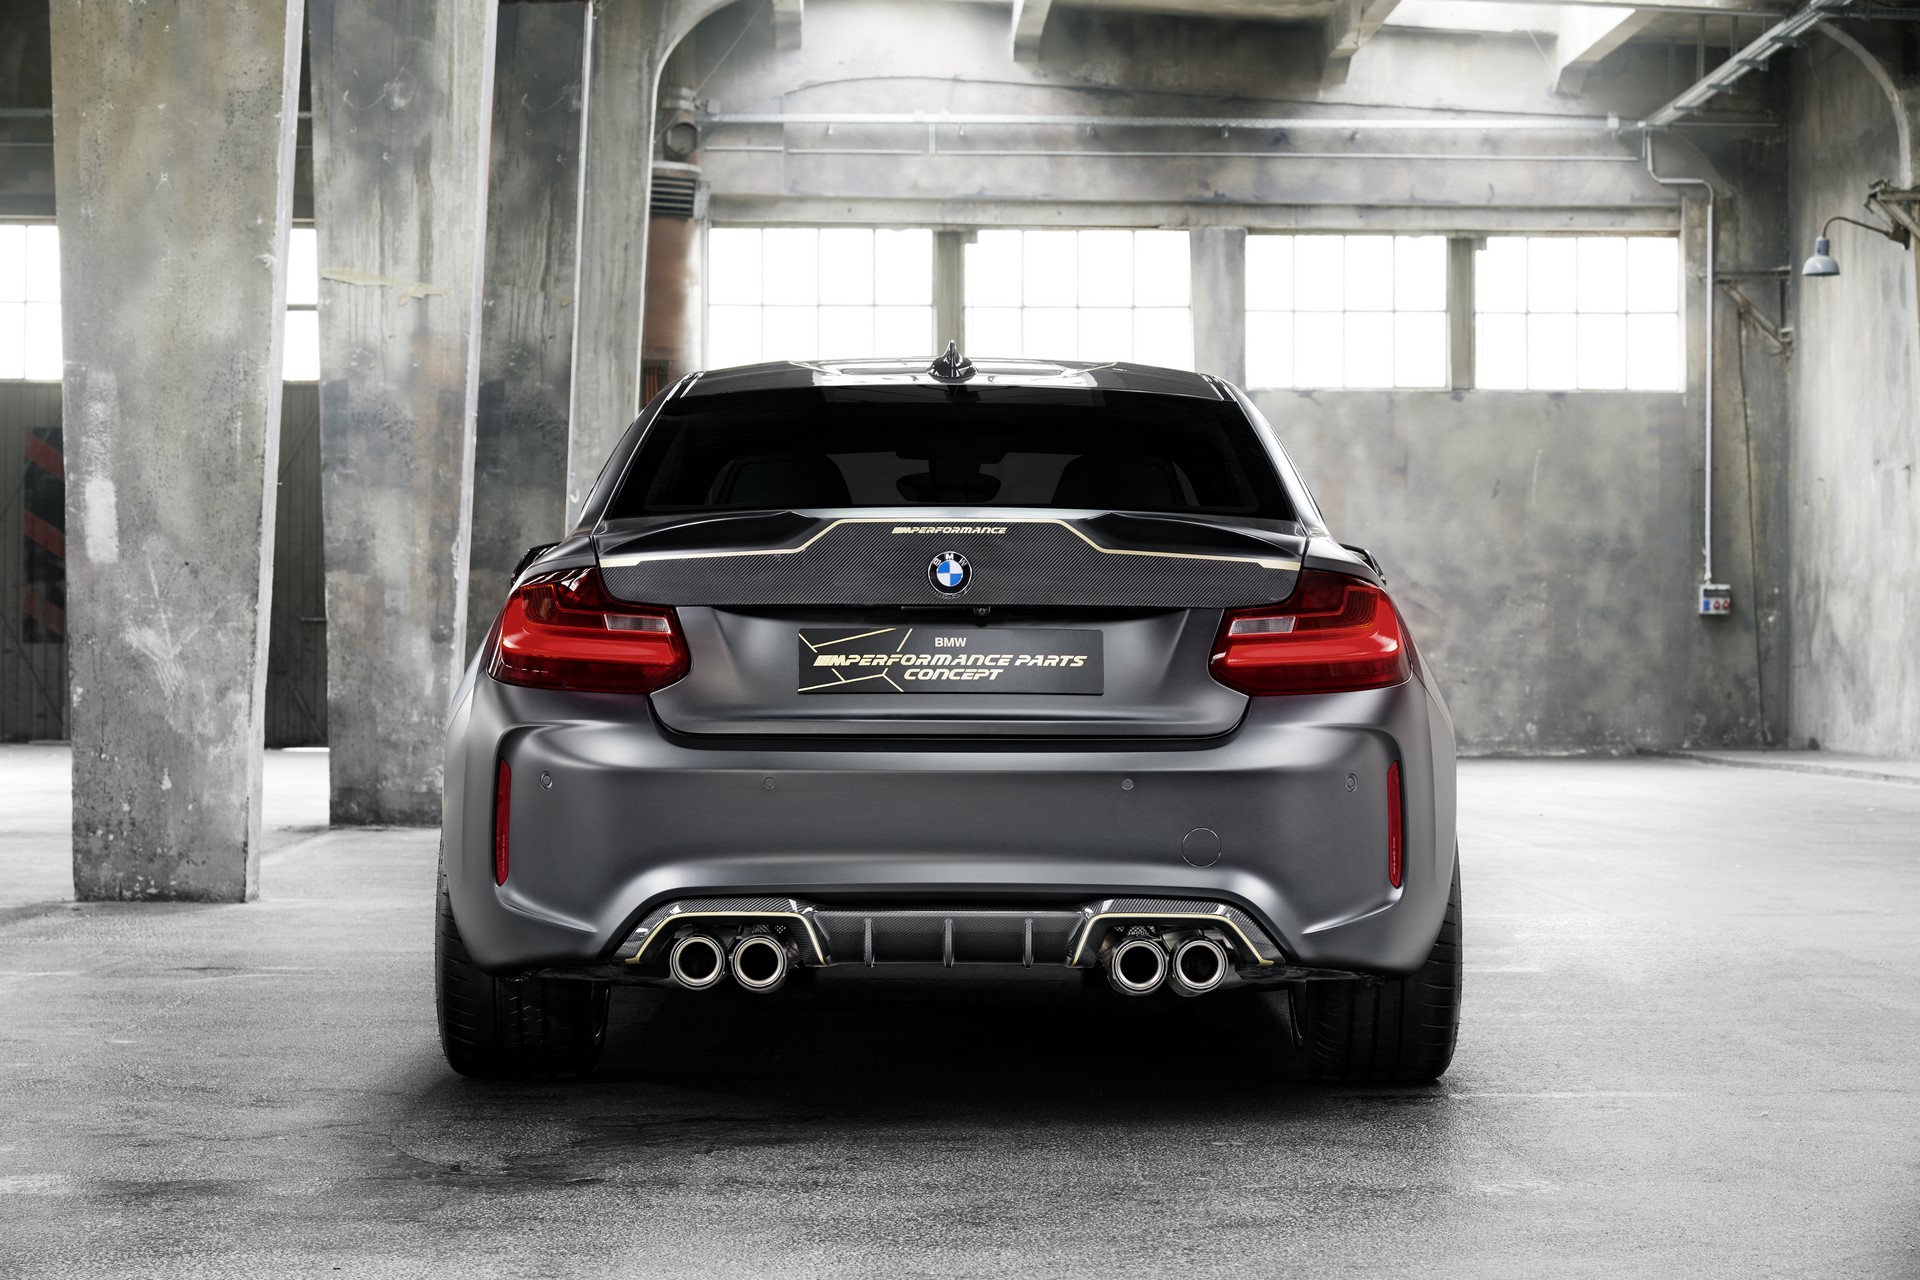 BMW-M-Performance-Parts-Concept-4.jpg